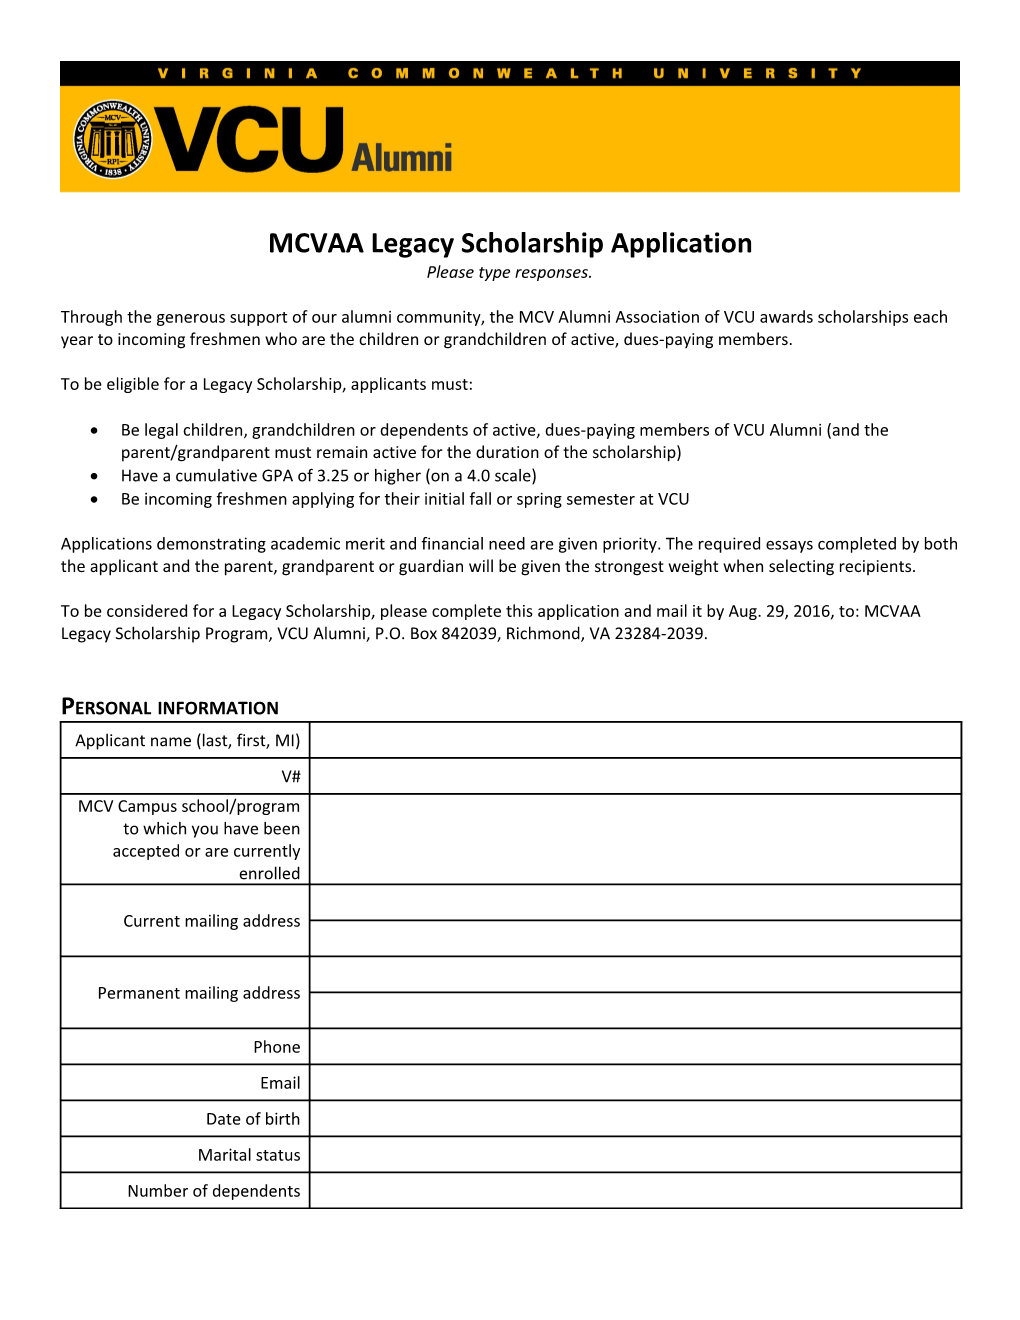 MCVAA Legacy Scholarship Application